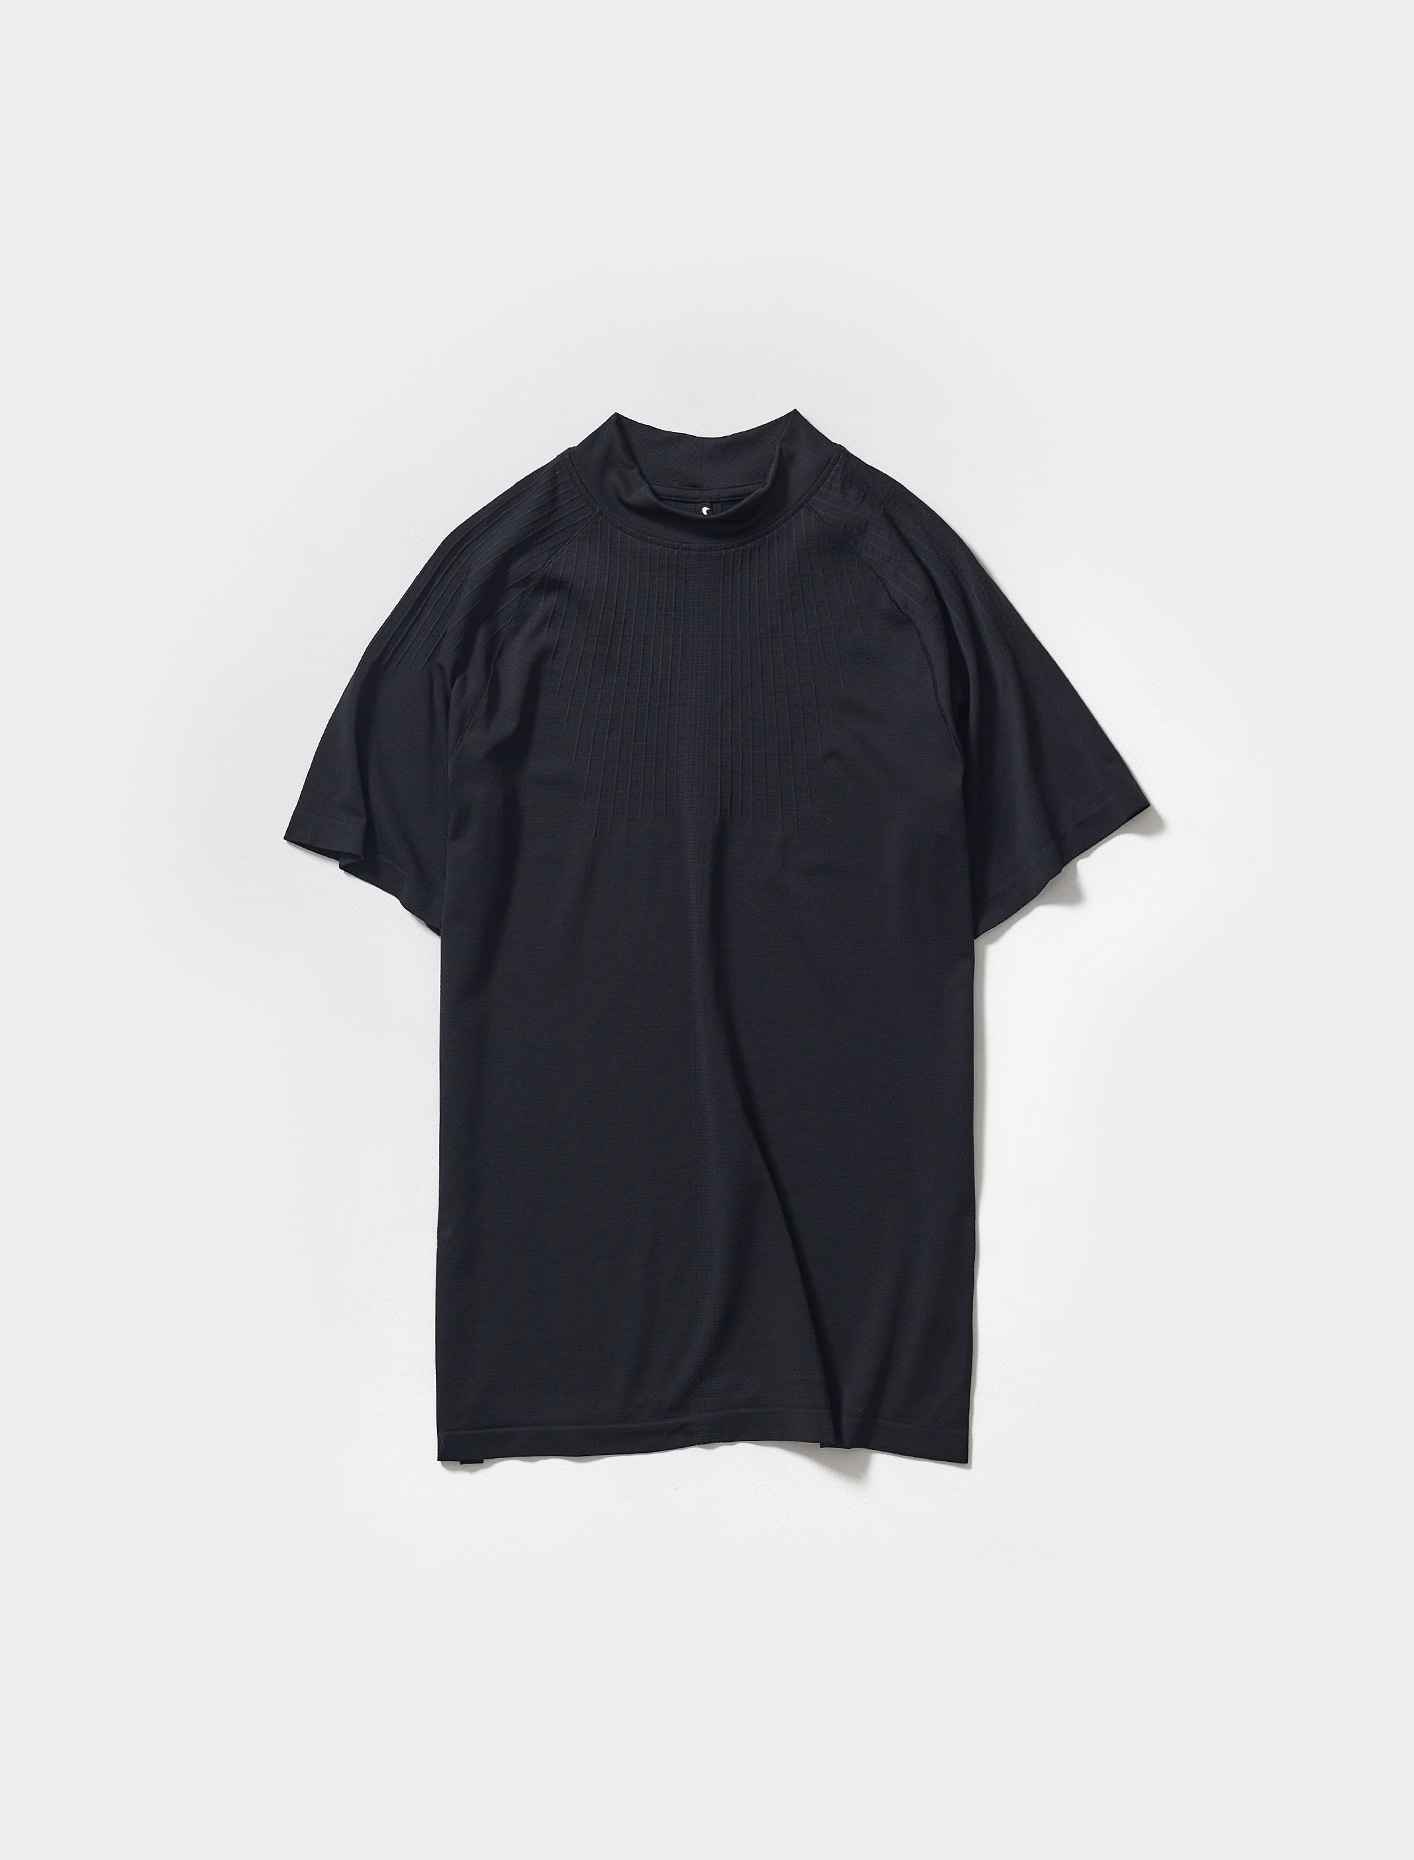 Mismo Asalto Neuropatía Nike x MMW Men's Yoga T-Shirt in Black | Voo Store Berlin | Worldwide  Shipping